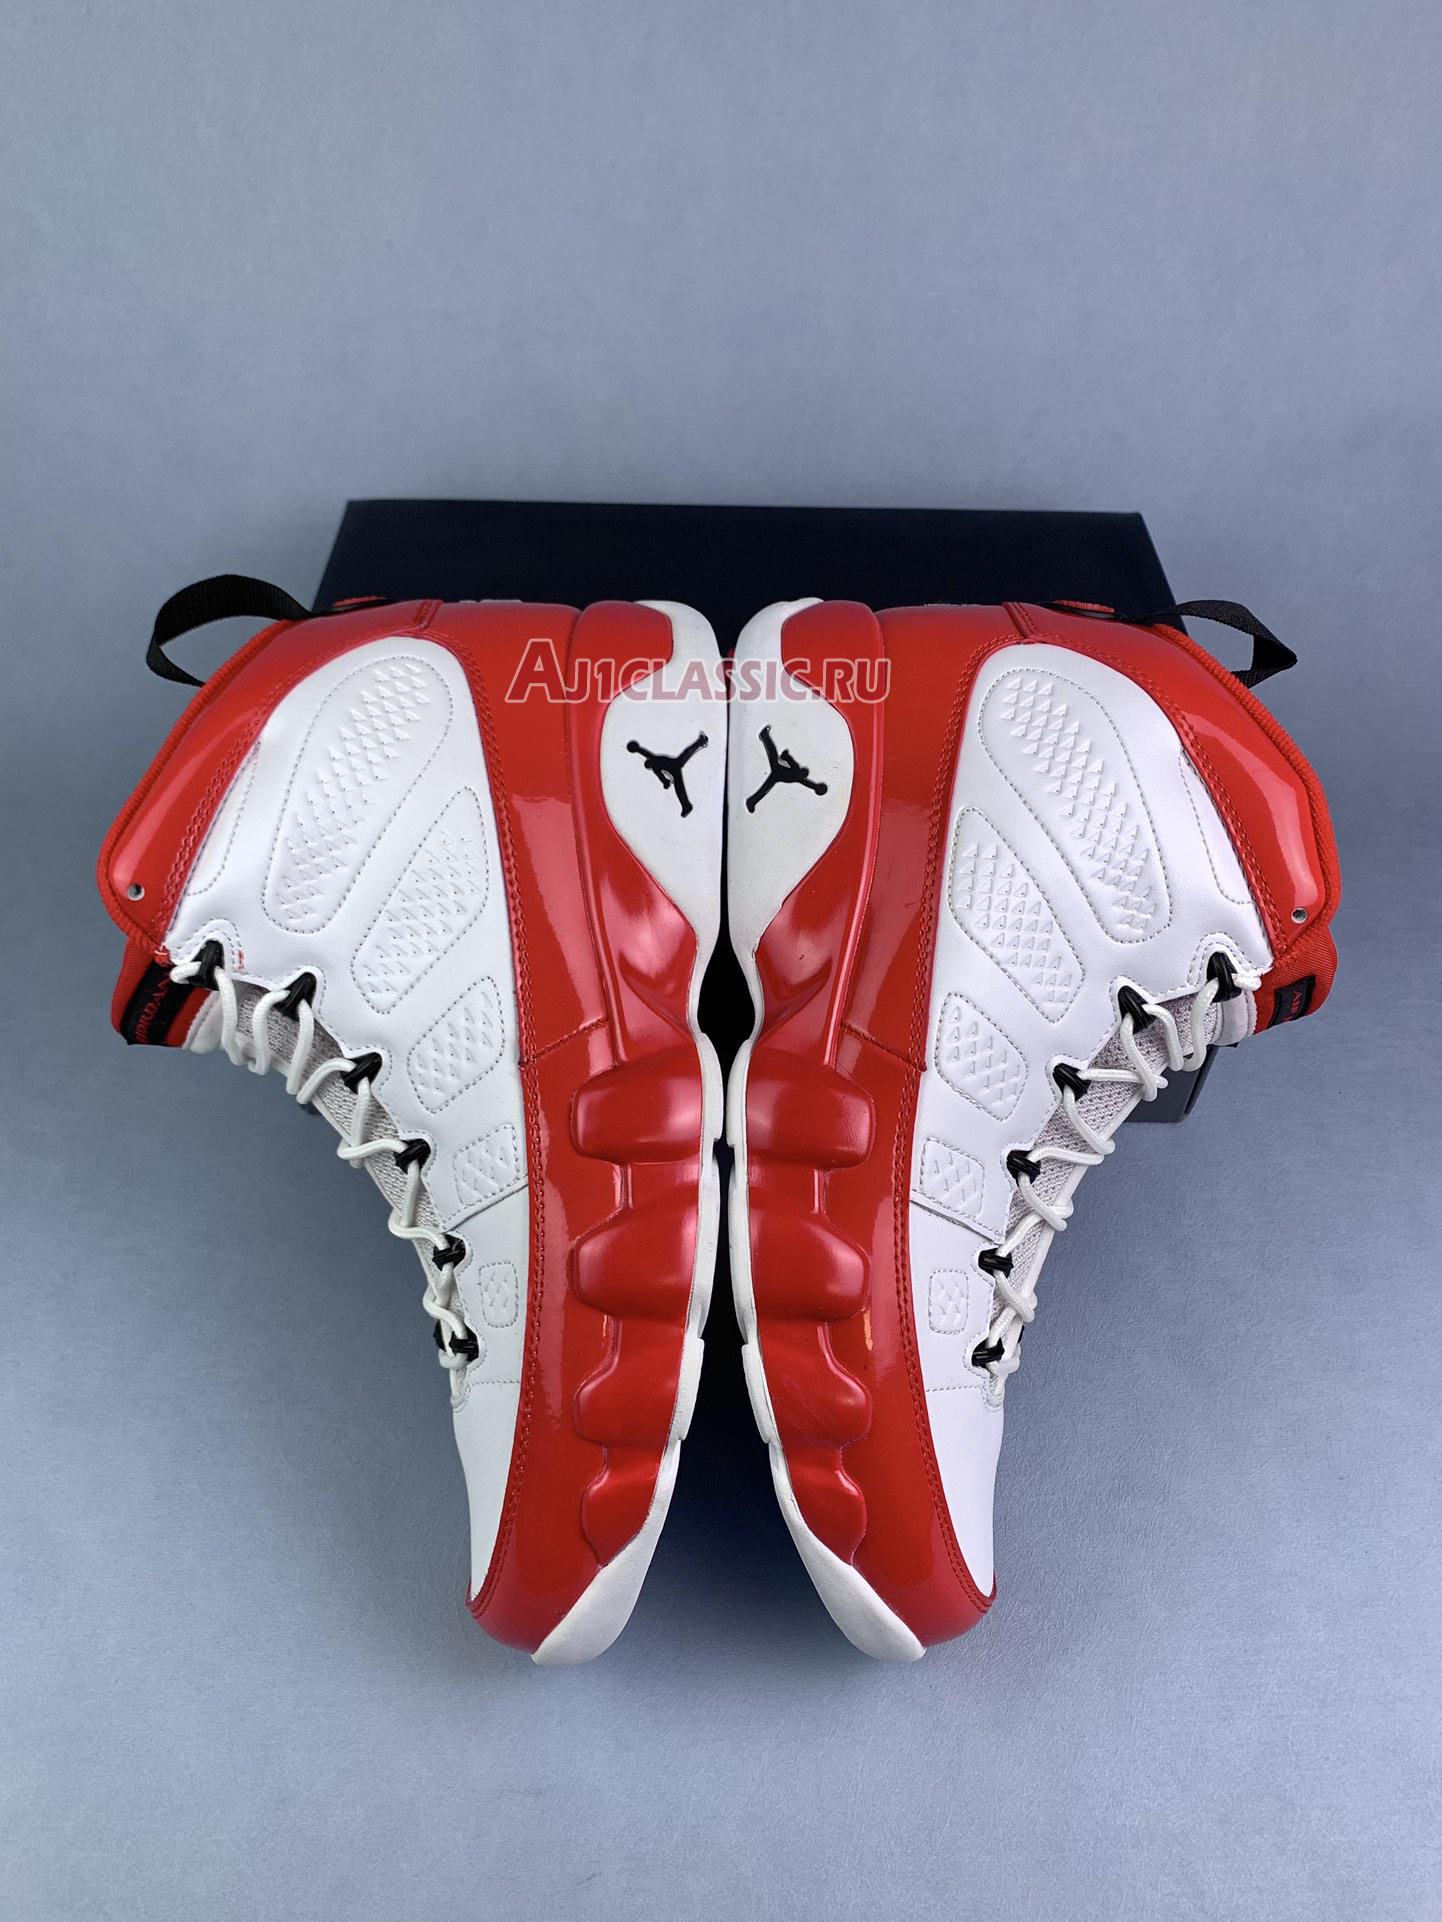 Air Jordan 9 Retro "Gym Red" 302370-160